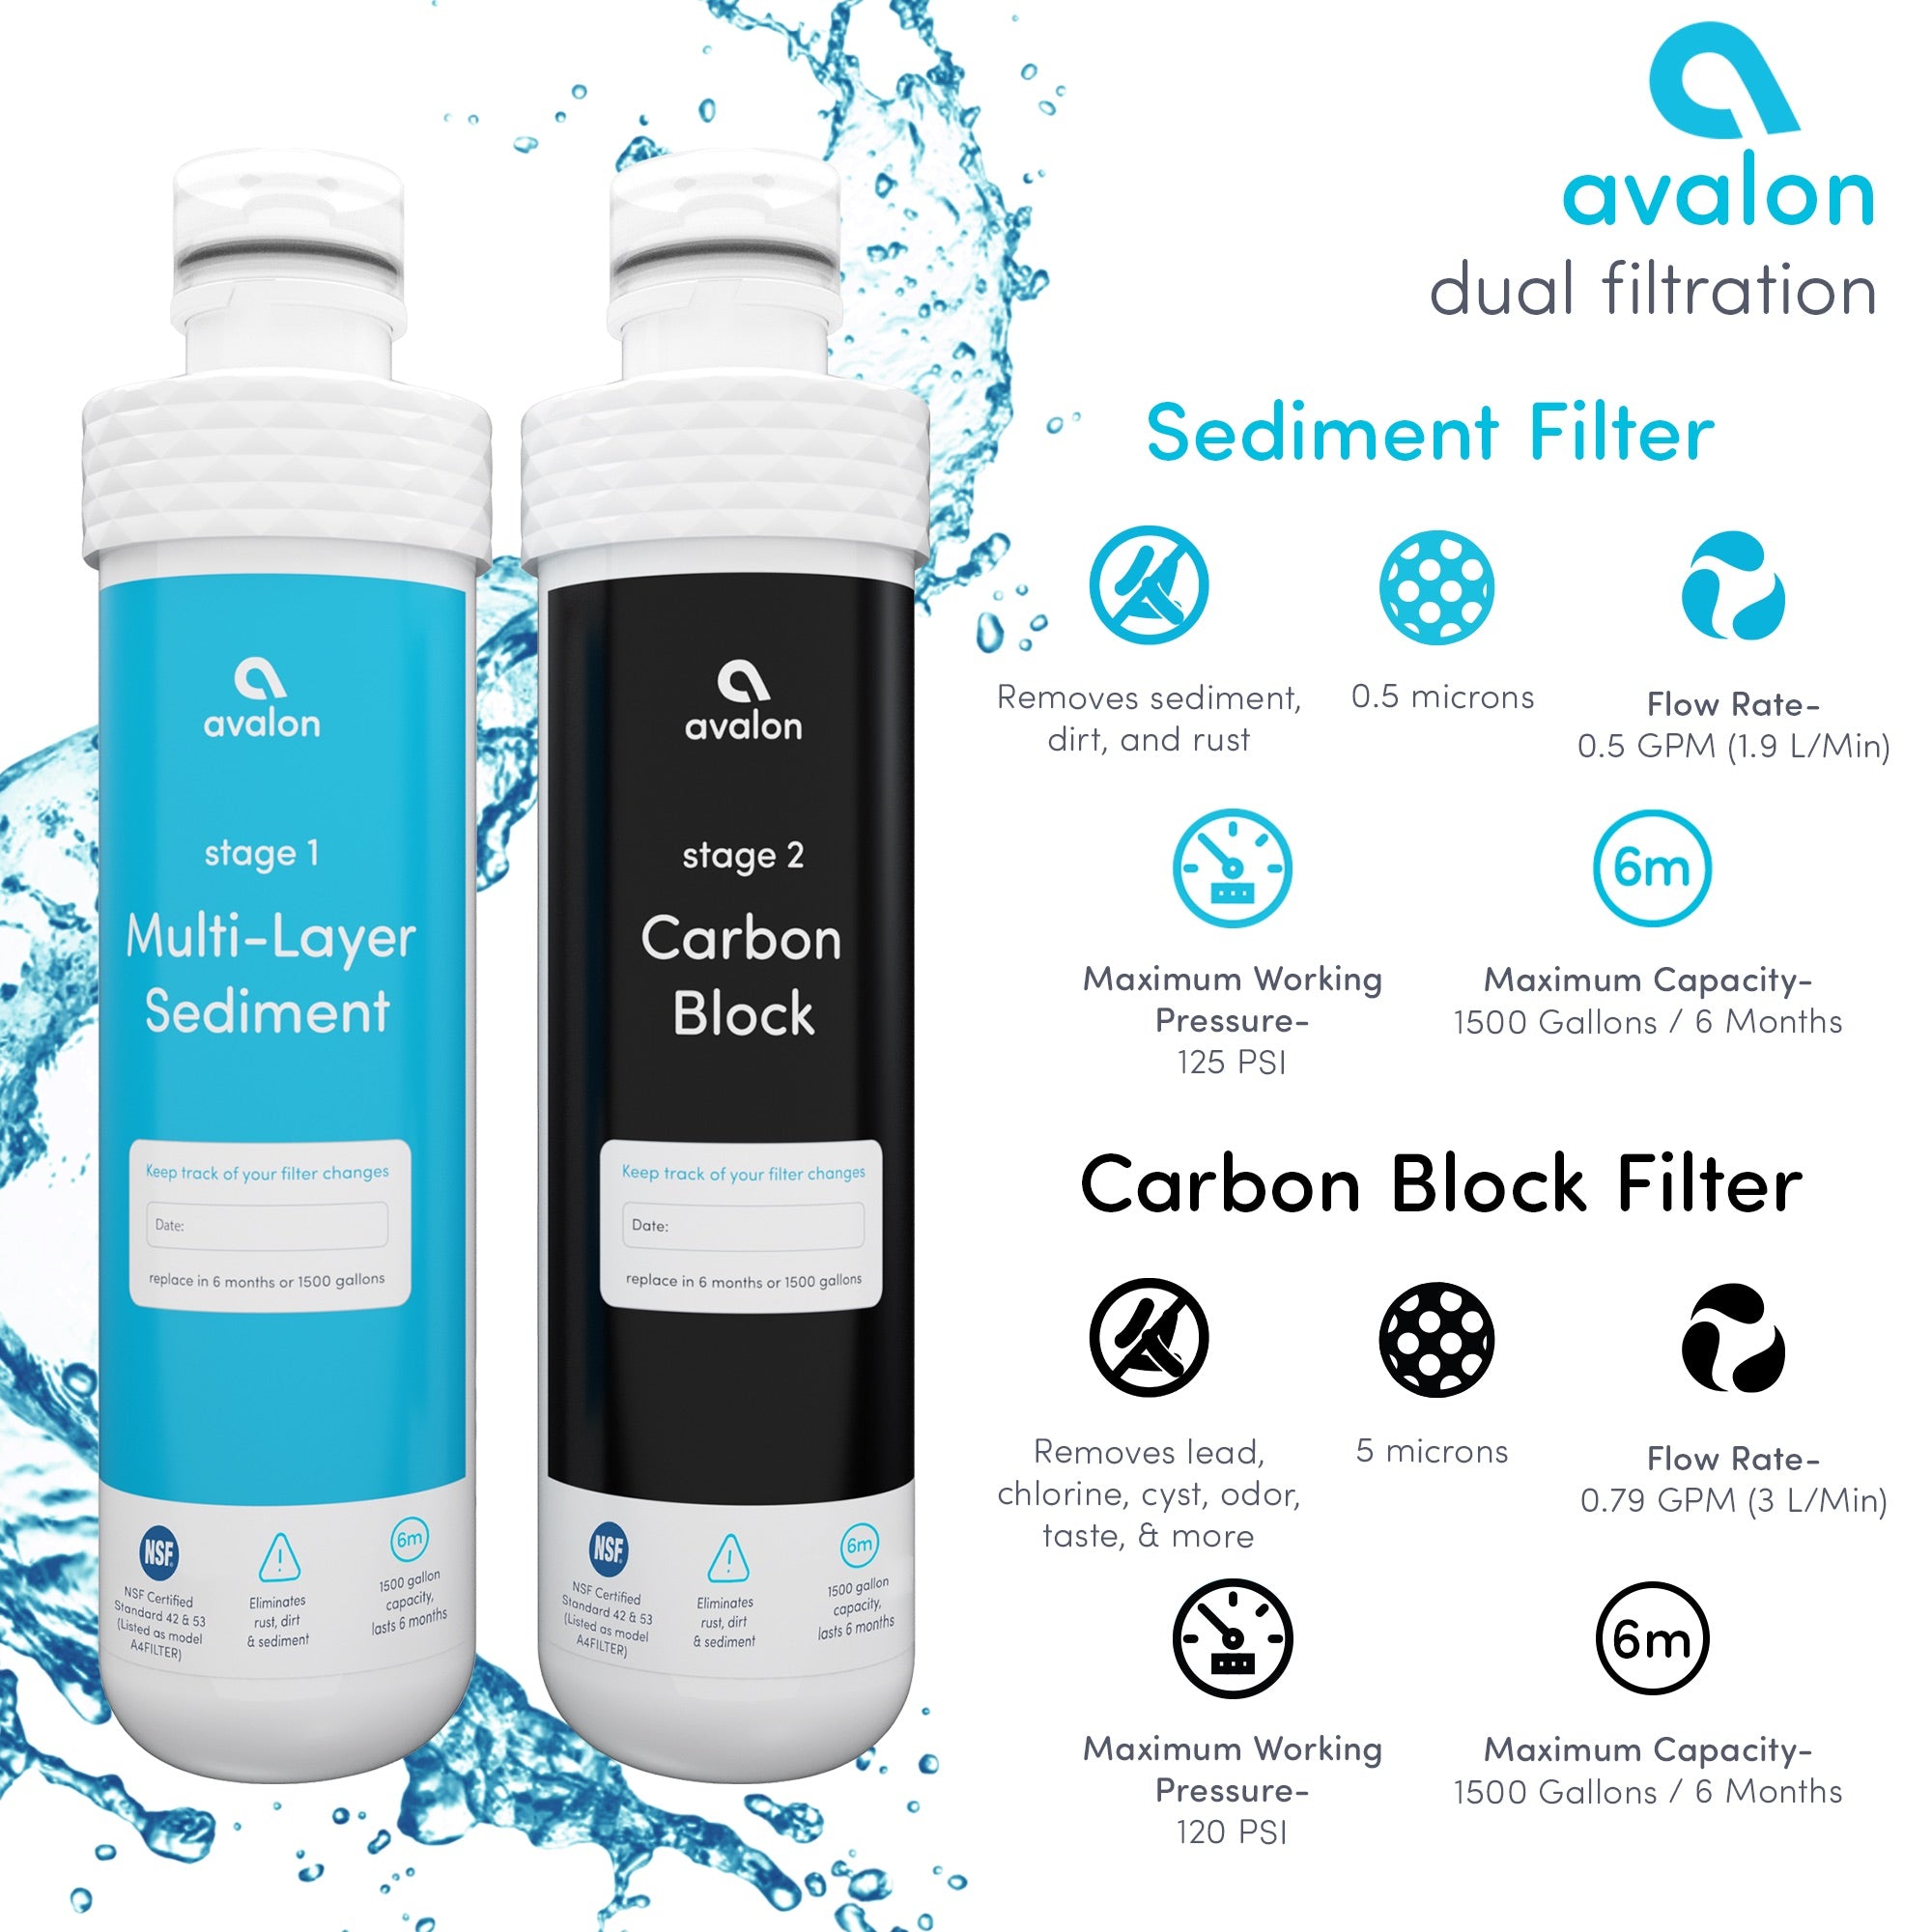 avalon water cooler filter